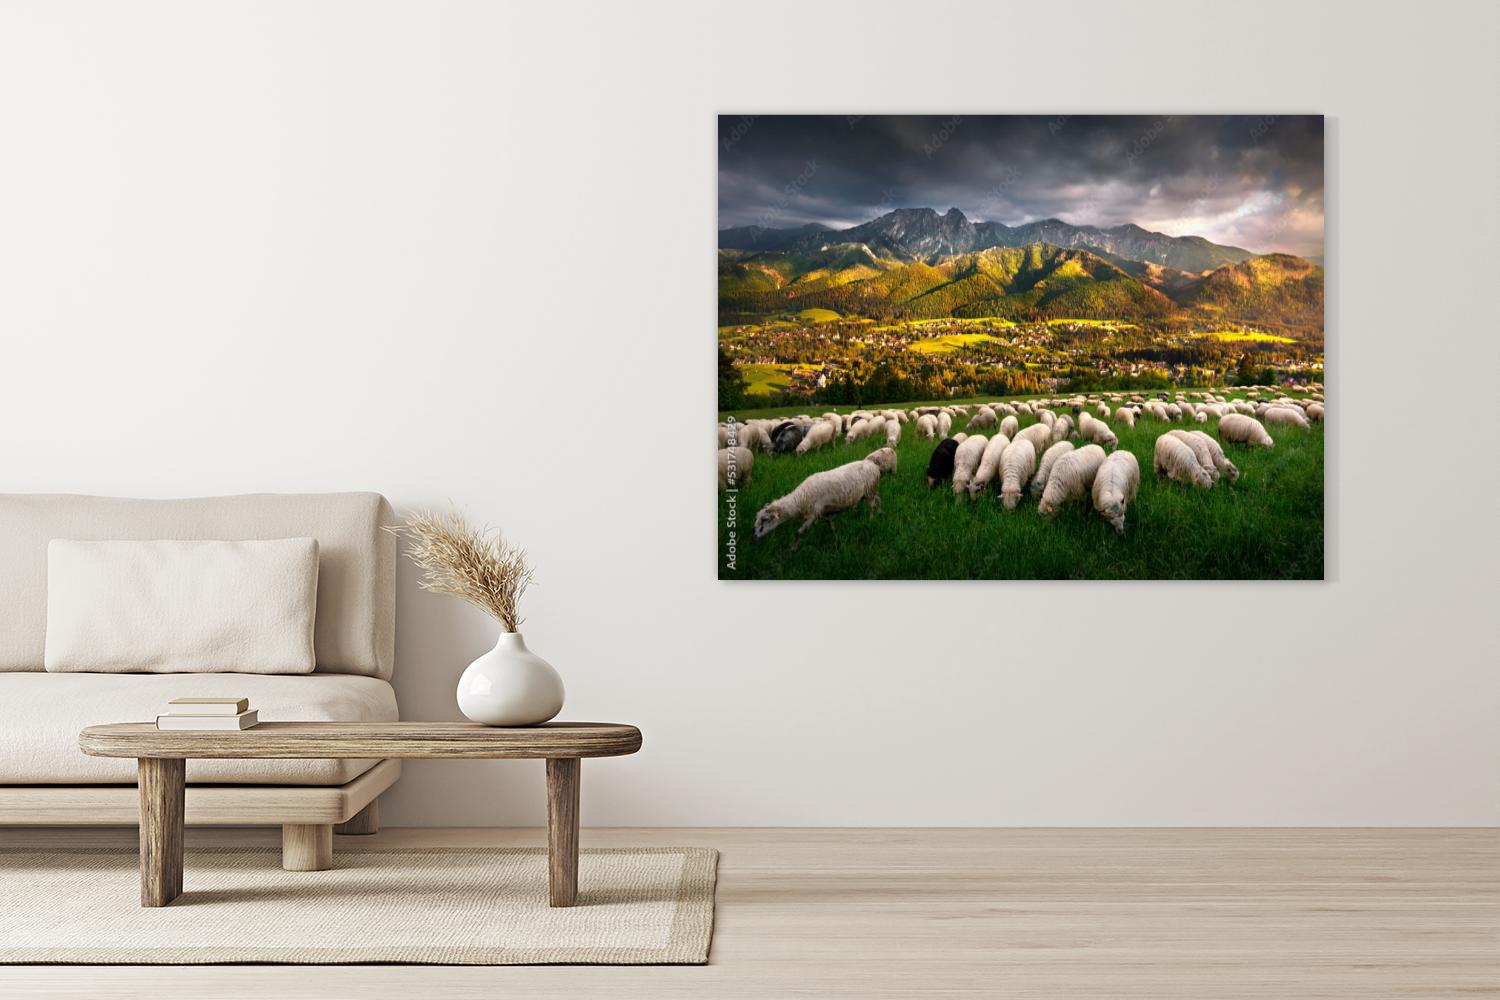 Owce pasące się na pastwisku